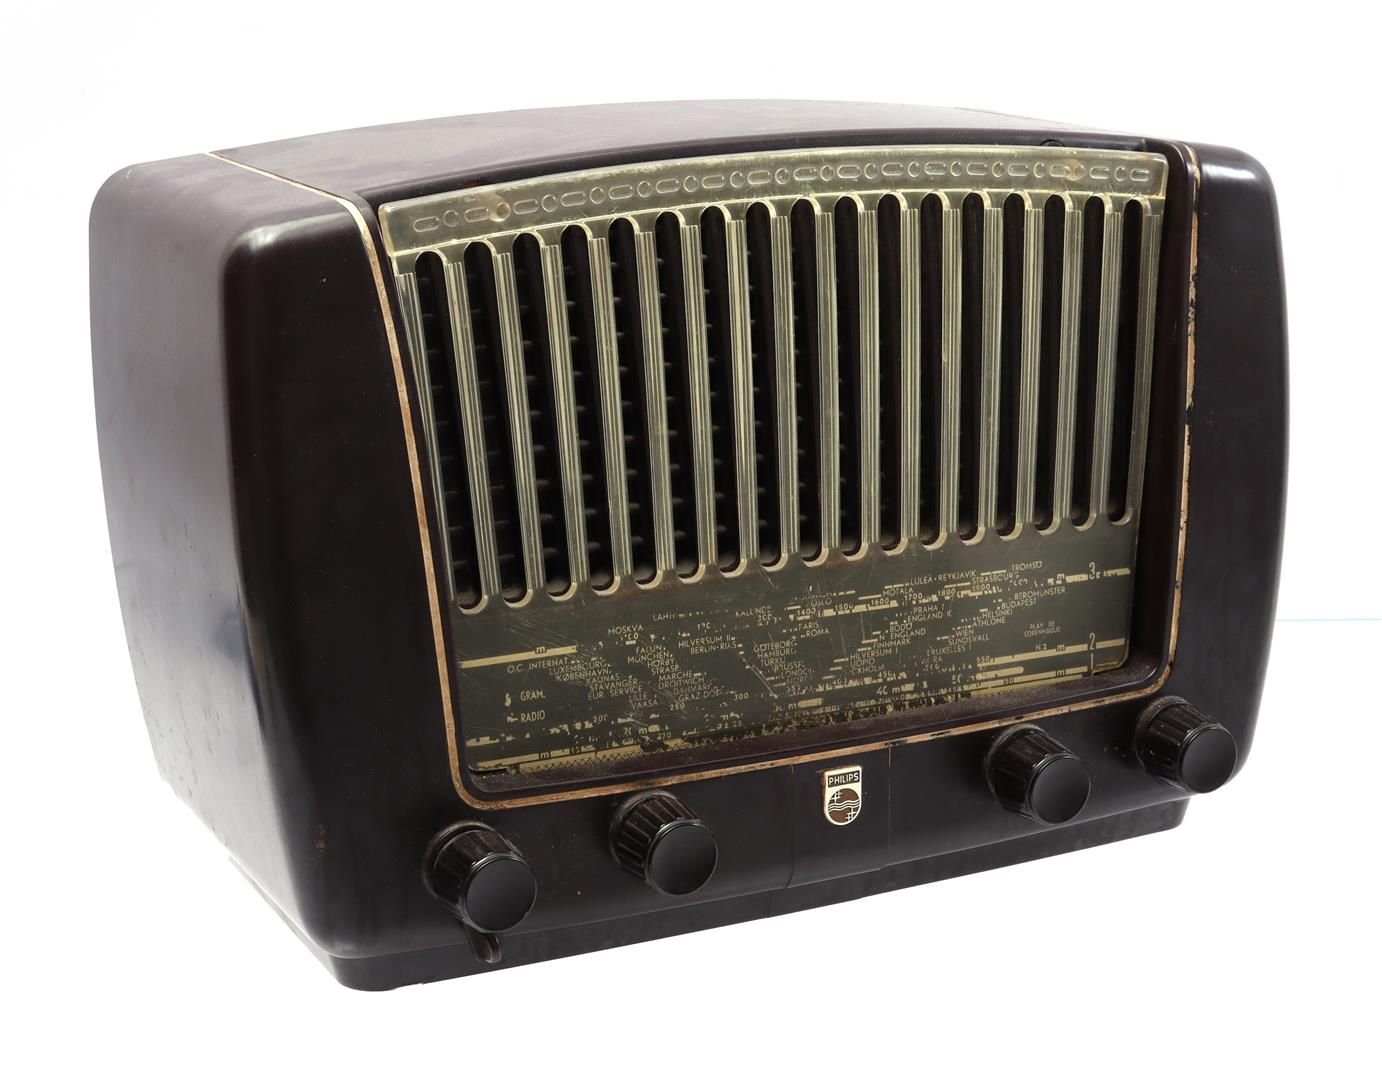 Philips BX310 bakelite radio Philips BX310 Bakelit-Radio, 37 cm breit